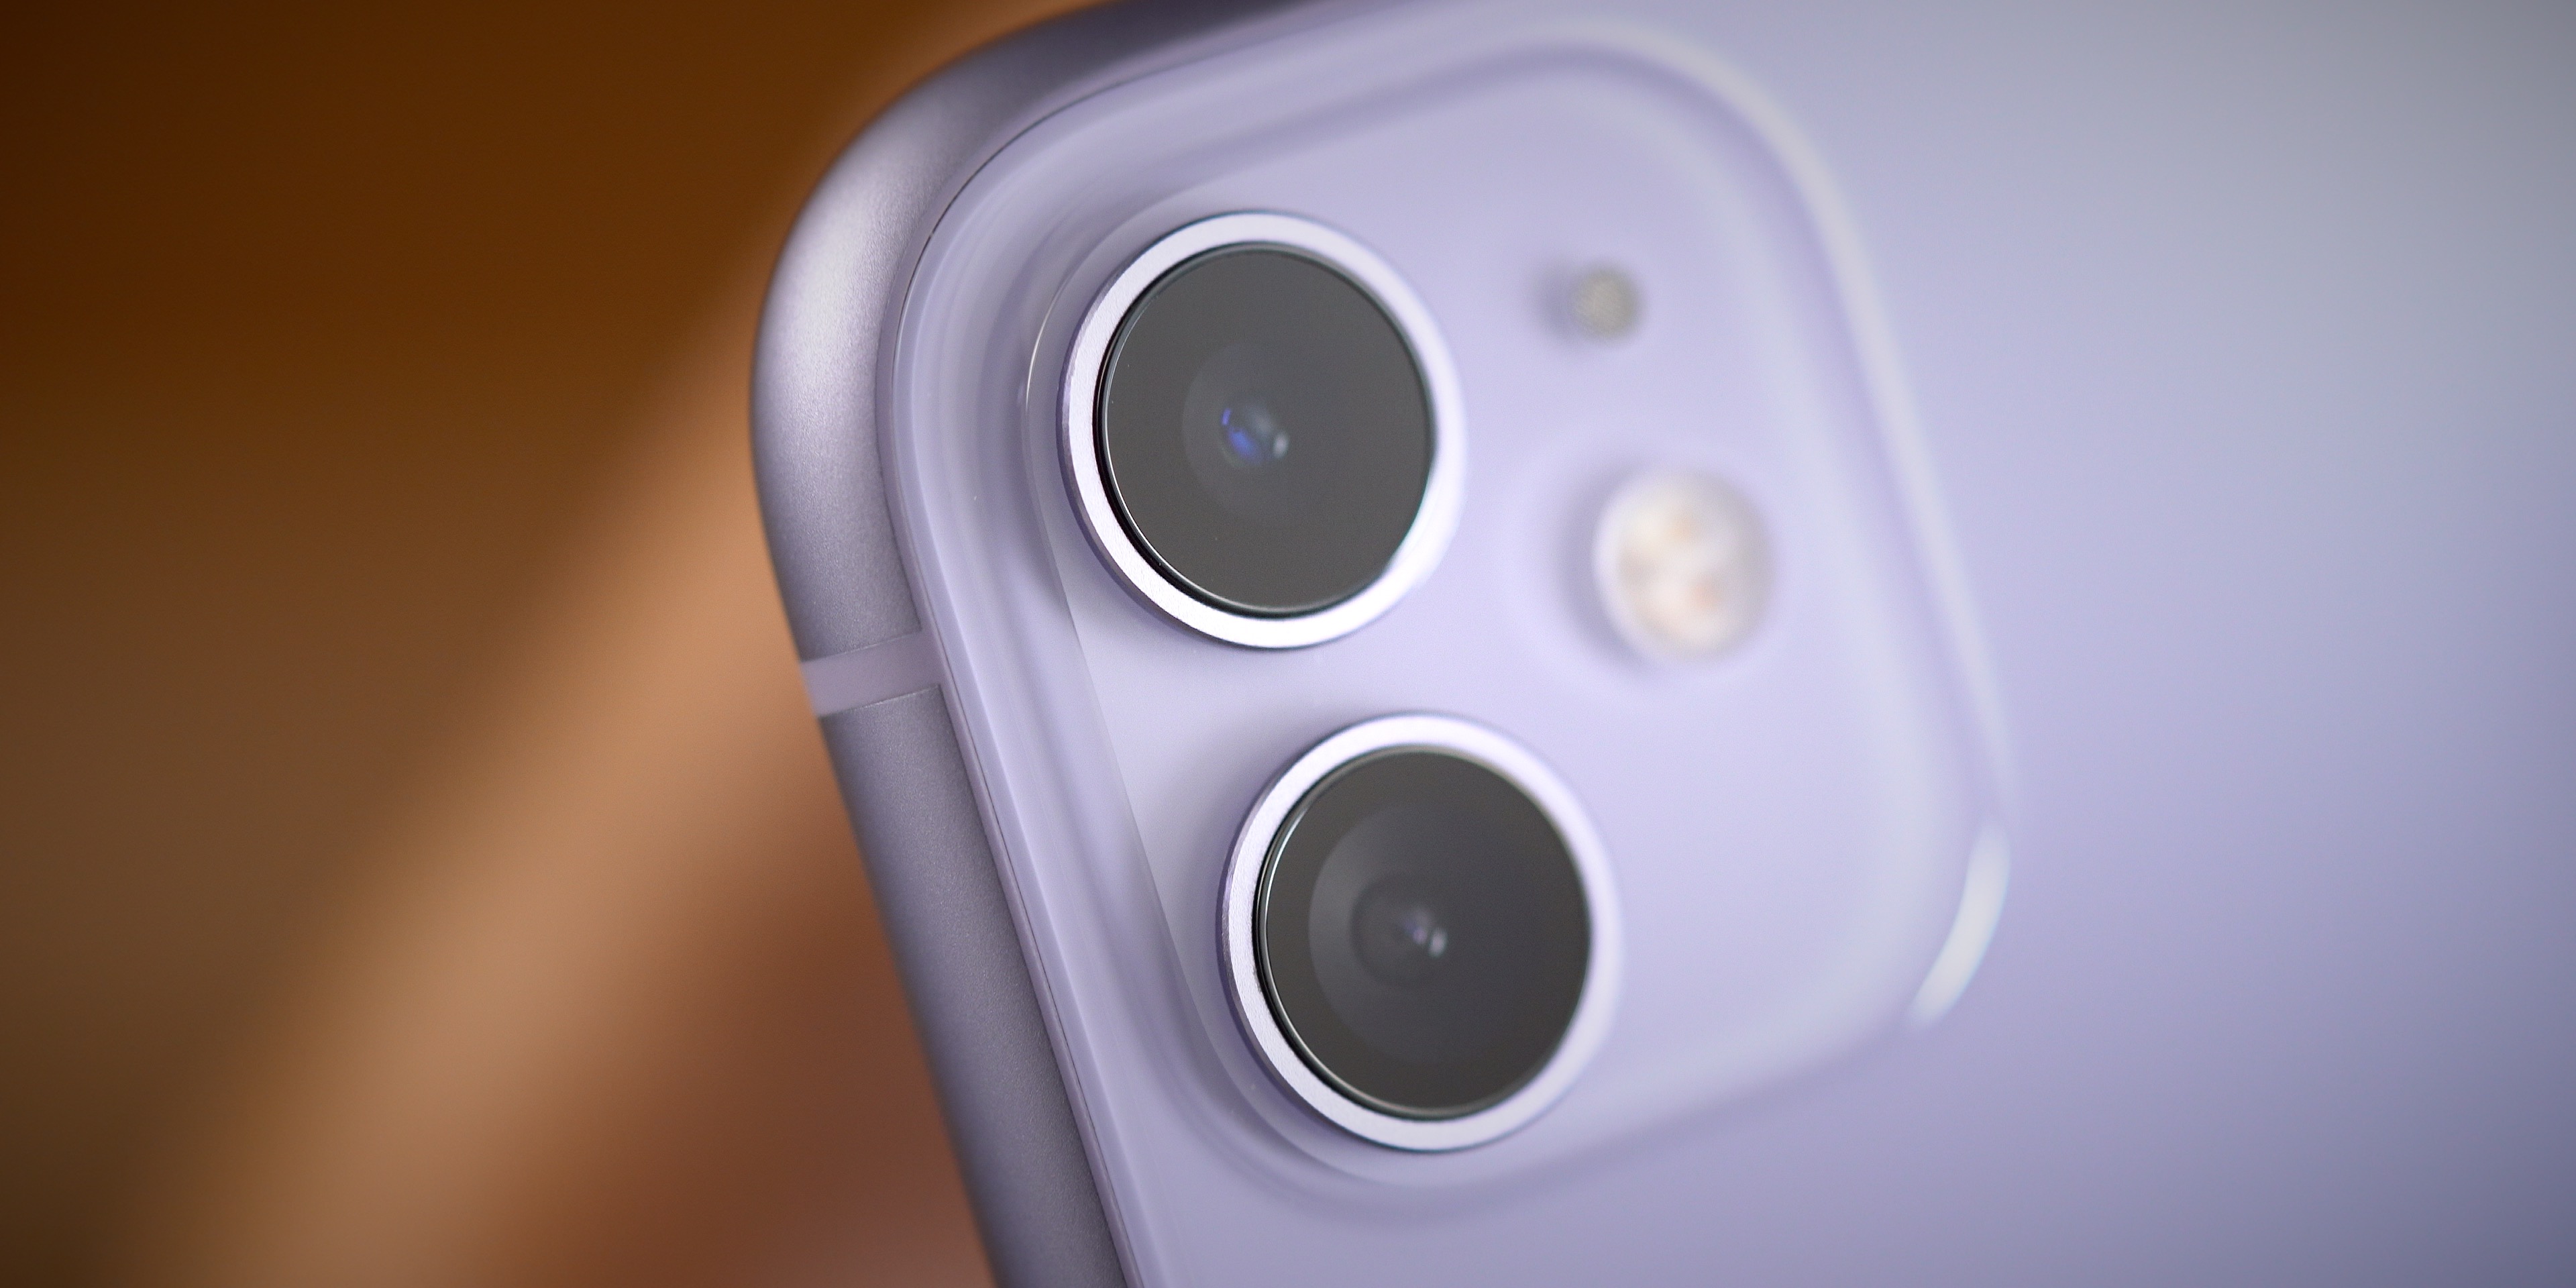 iPhone 11 dual camera up close